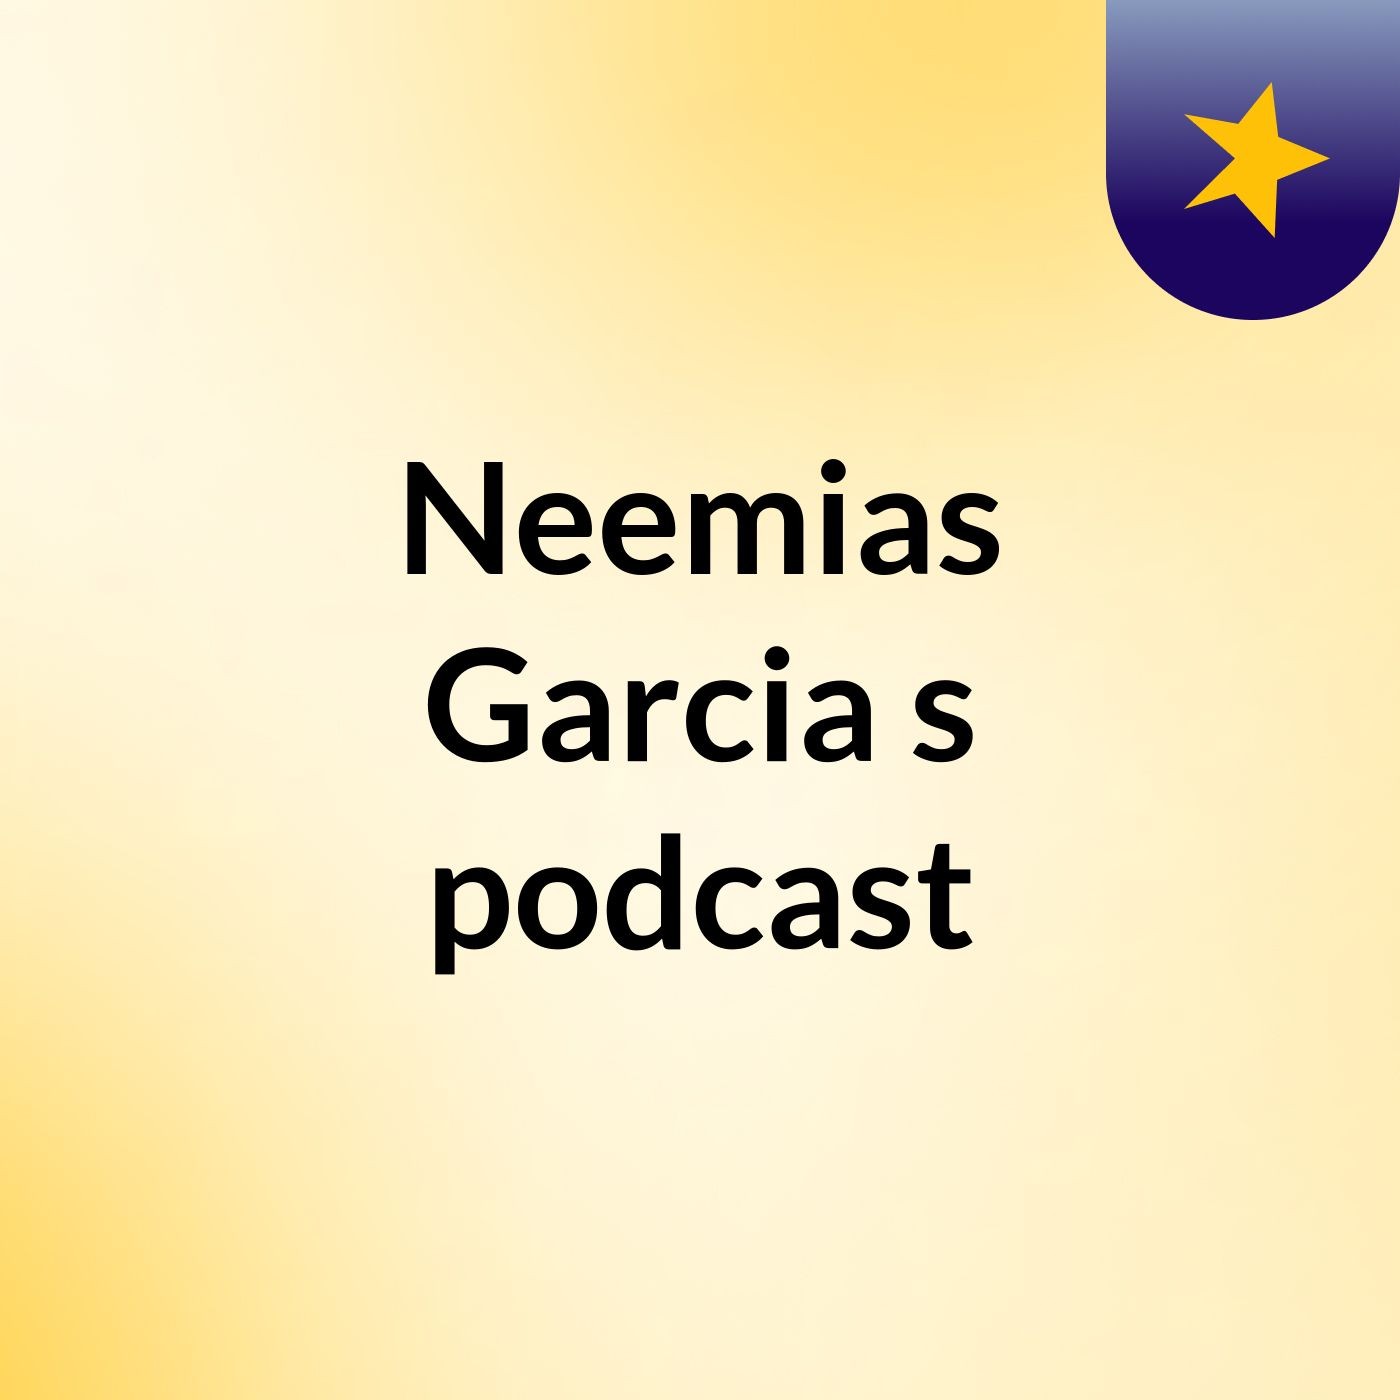 Neemias Garcia's podcast